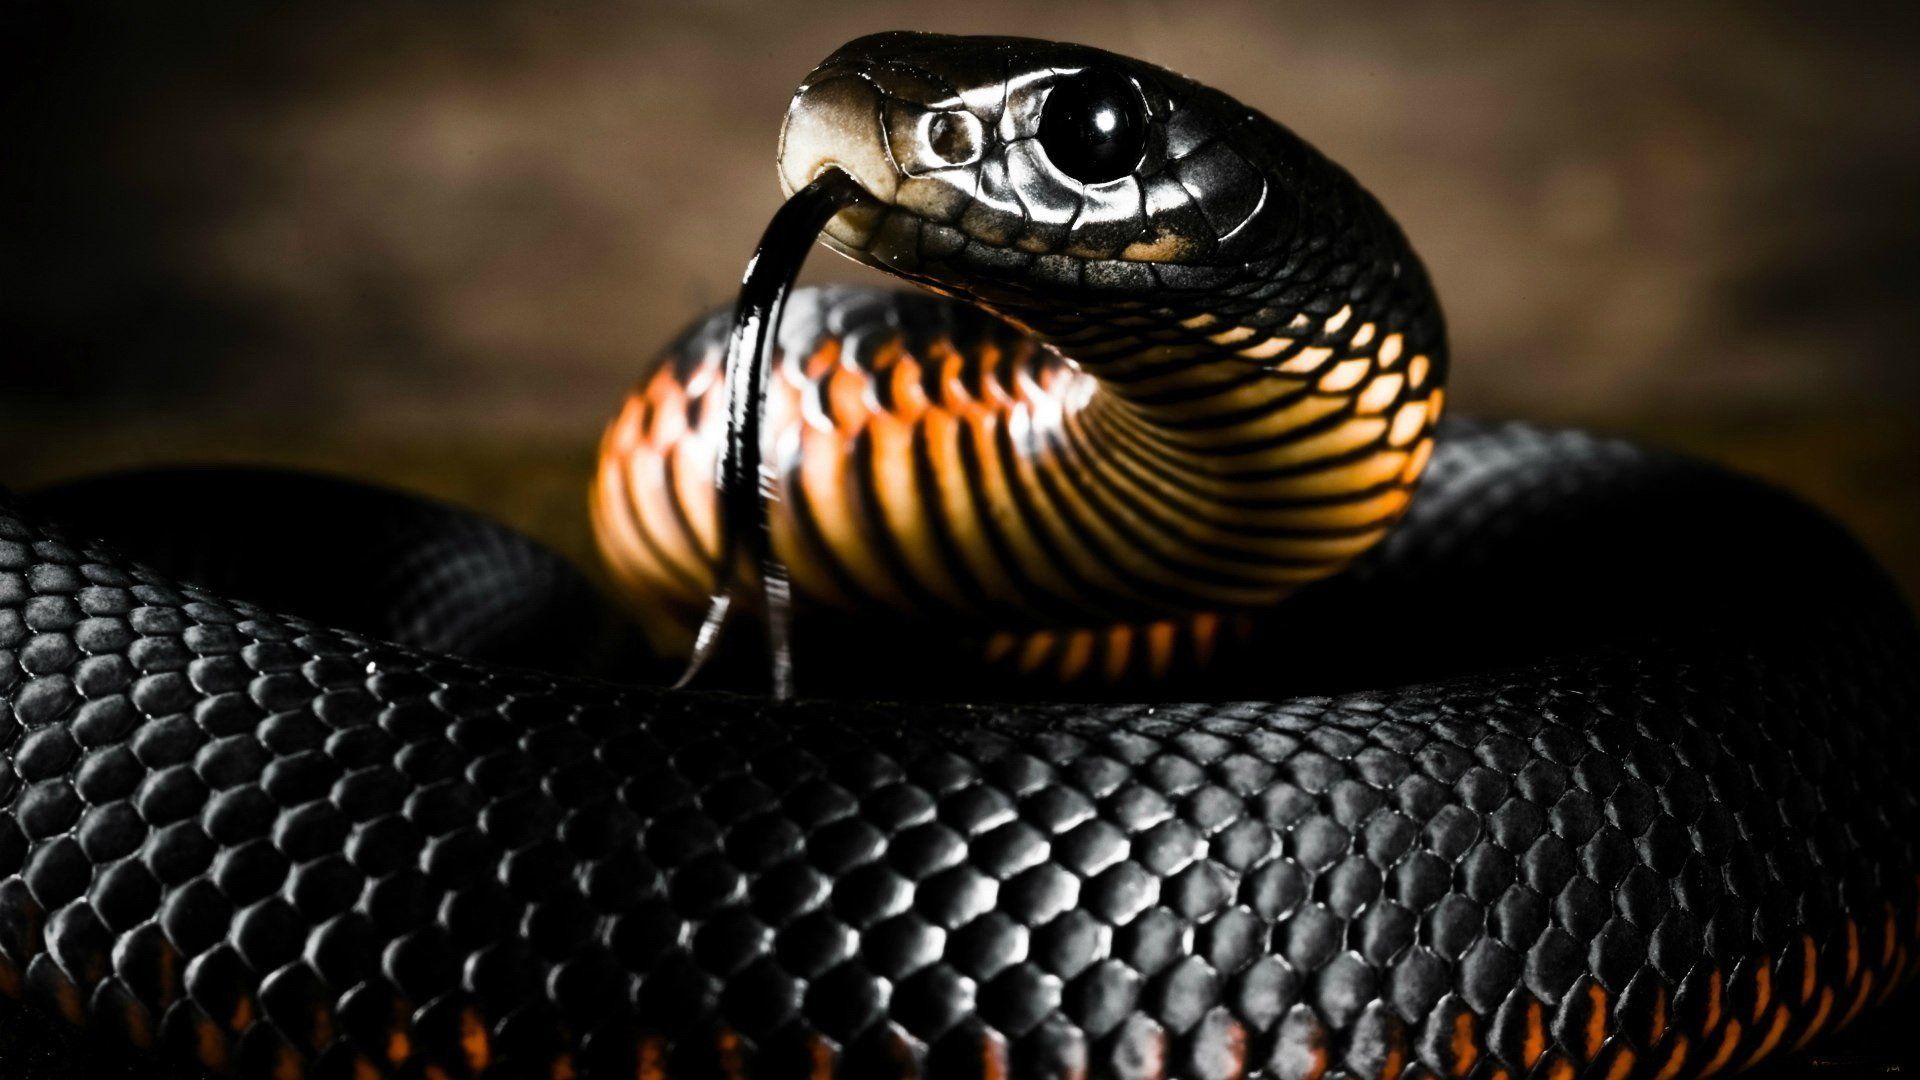 king cobra hd wallpaper download,reptile,terrestrial animal,snake,serpent,scaled  reptile (#297064) - WallpaperUse